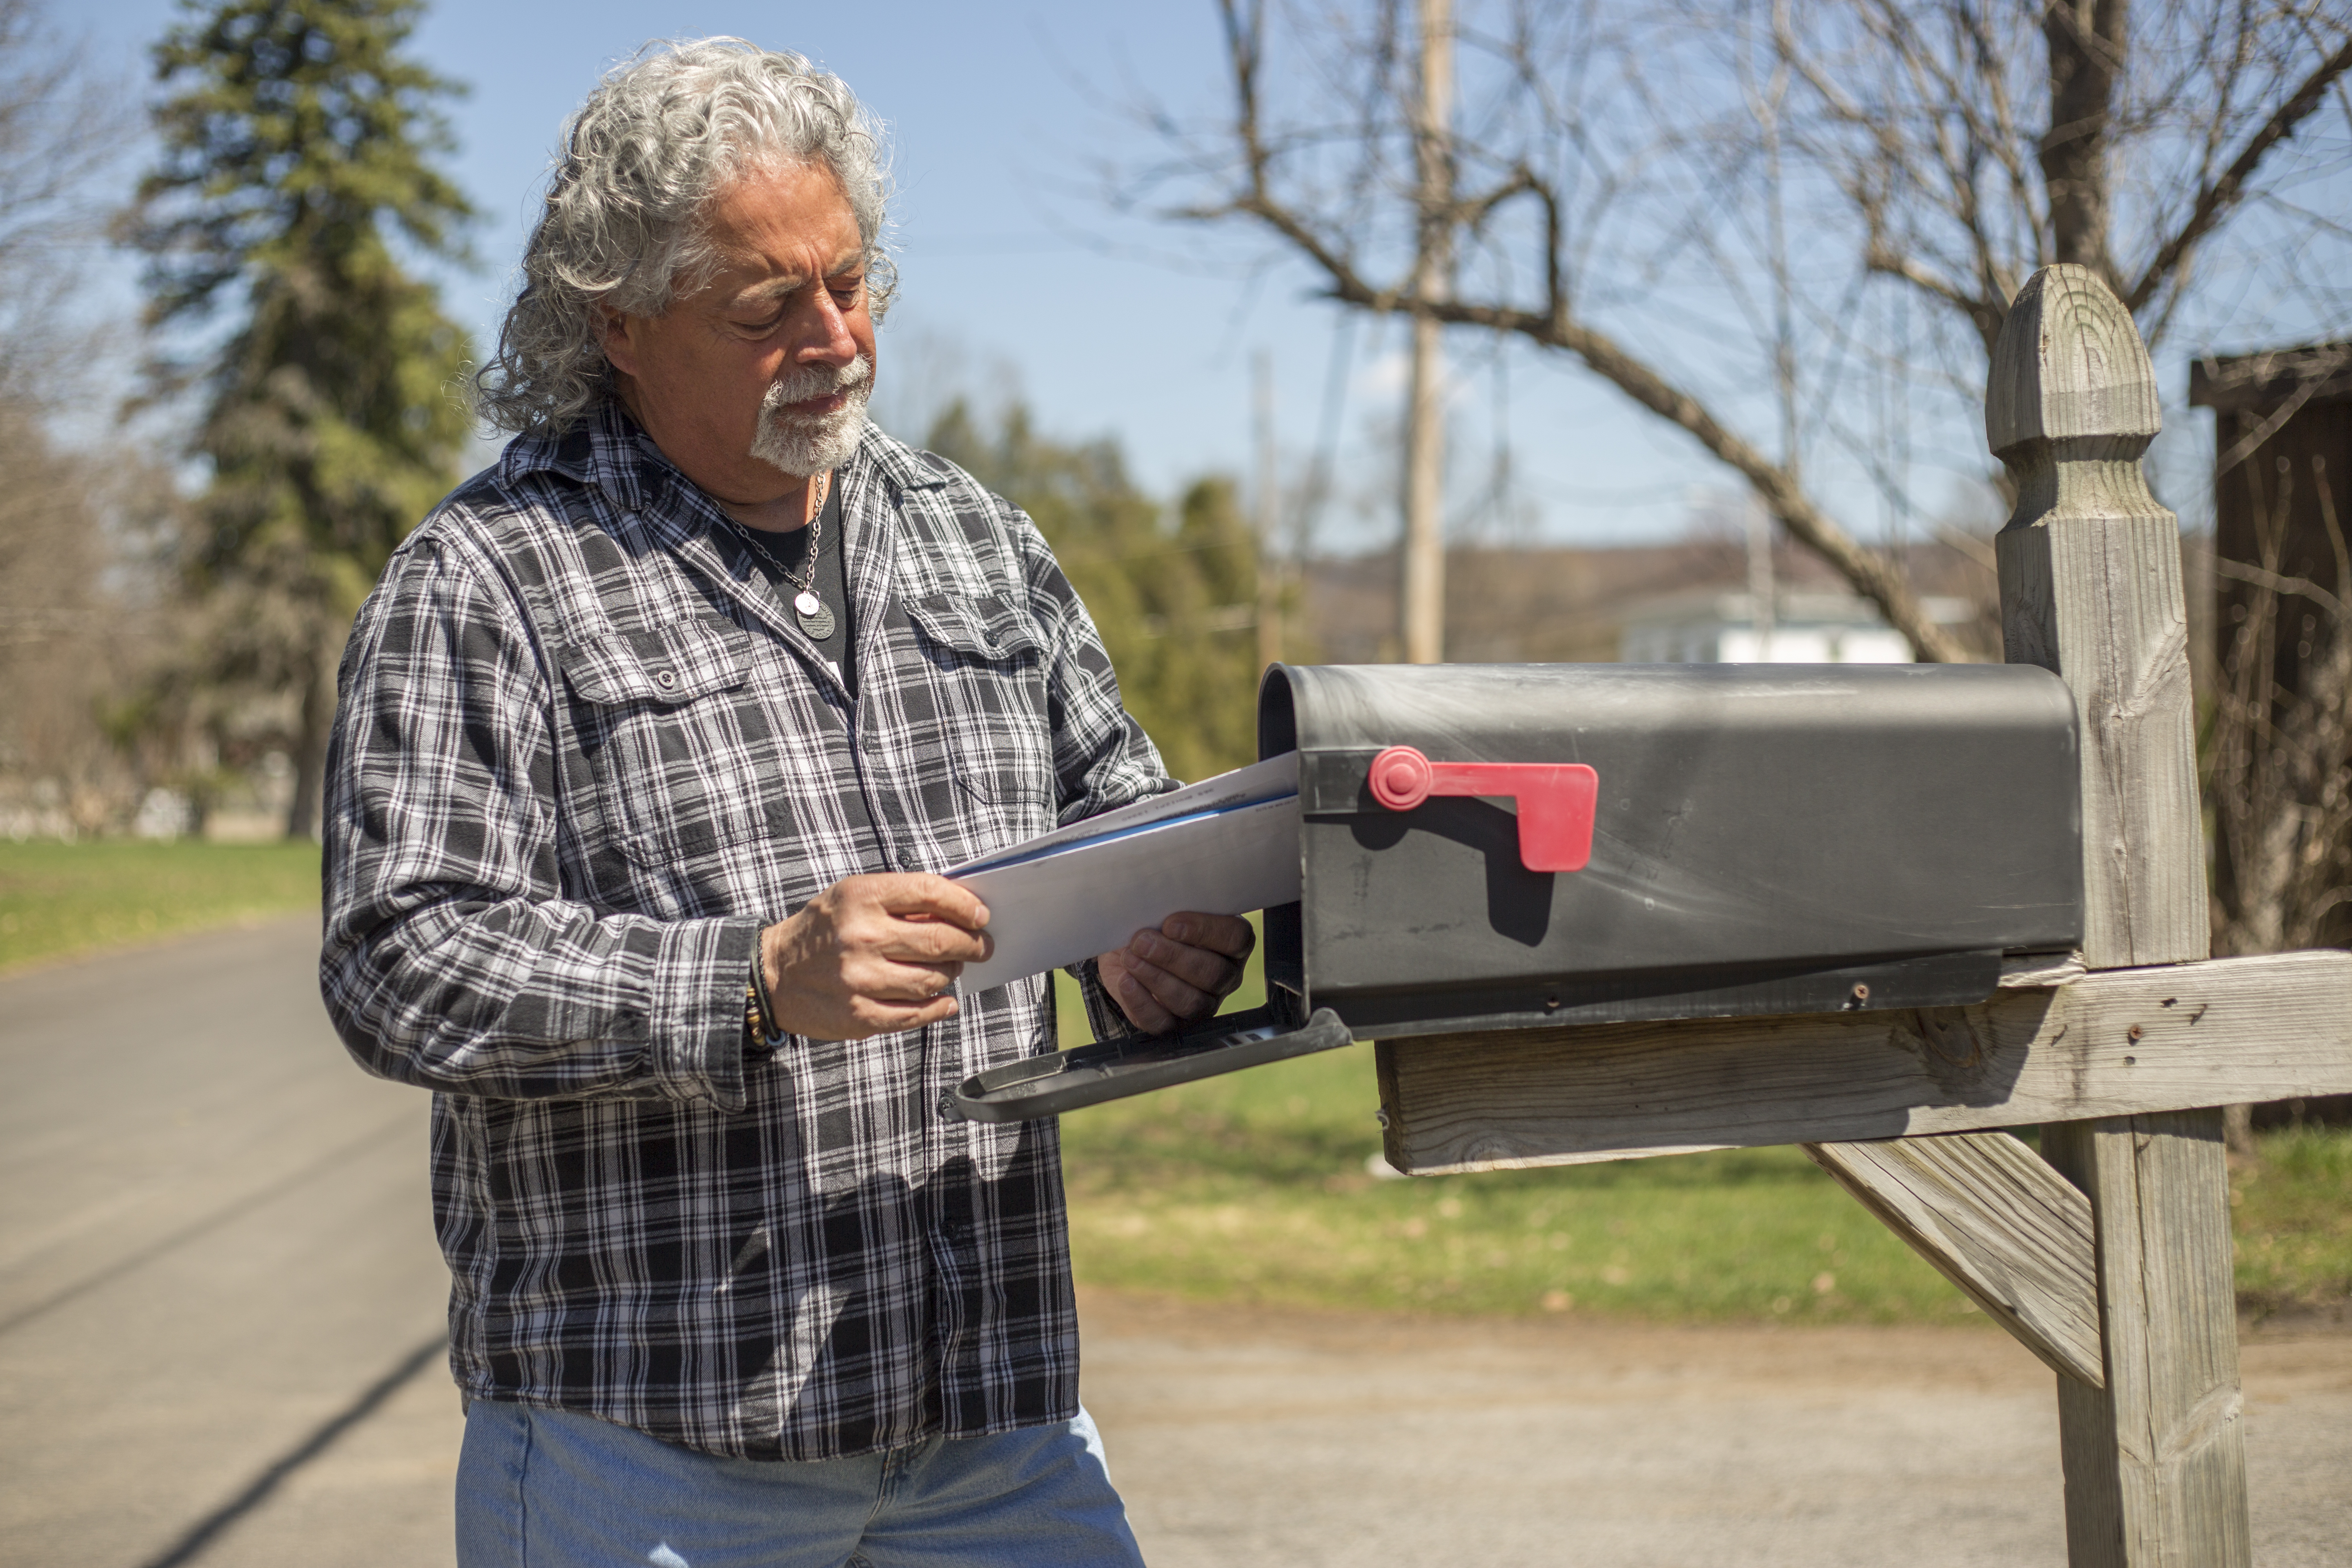 A man puts an envelope in a mailbox | Source: Shutterstock